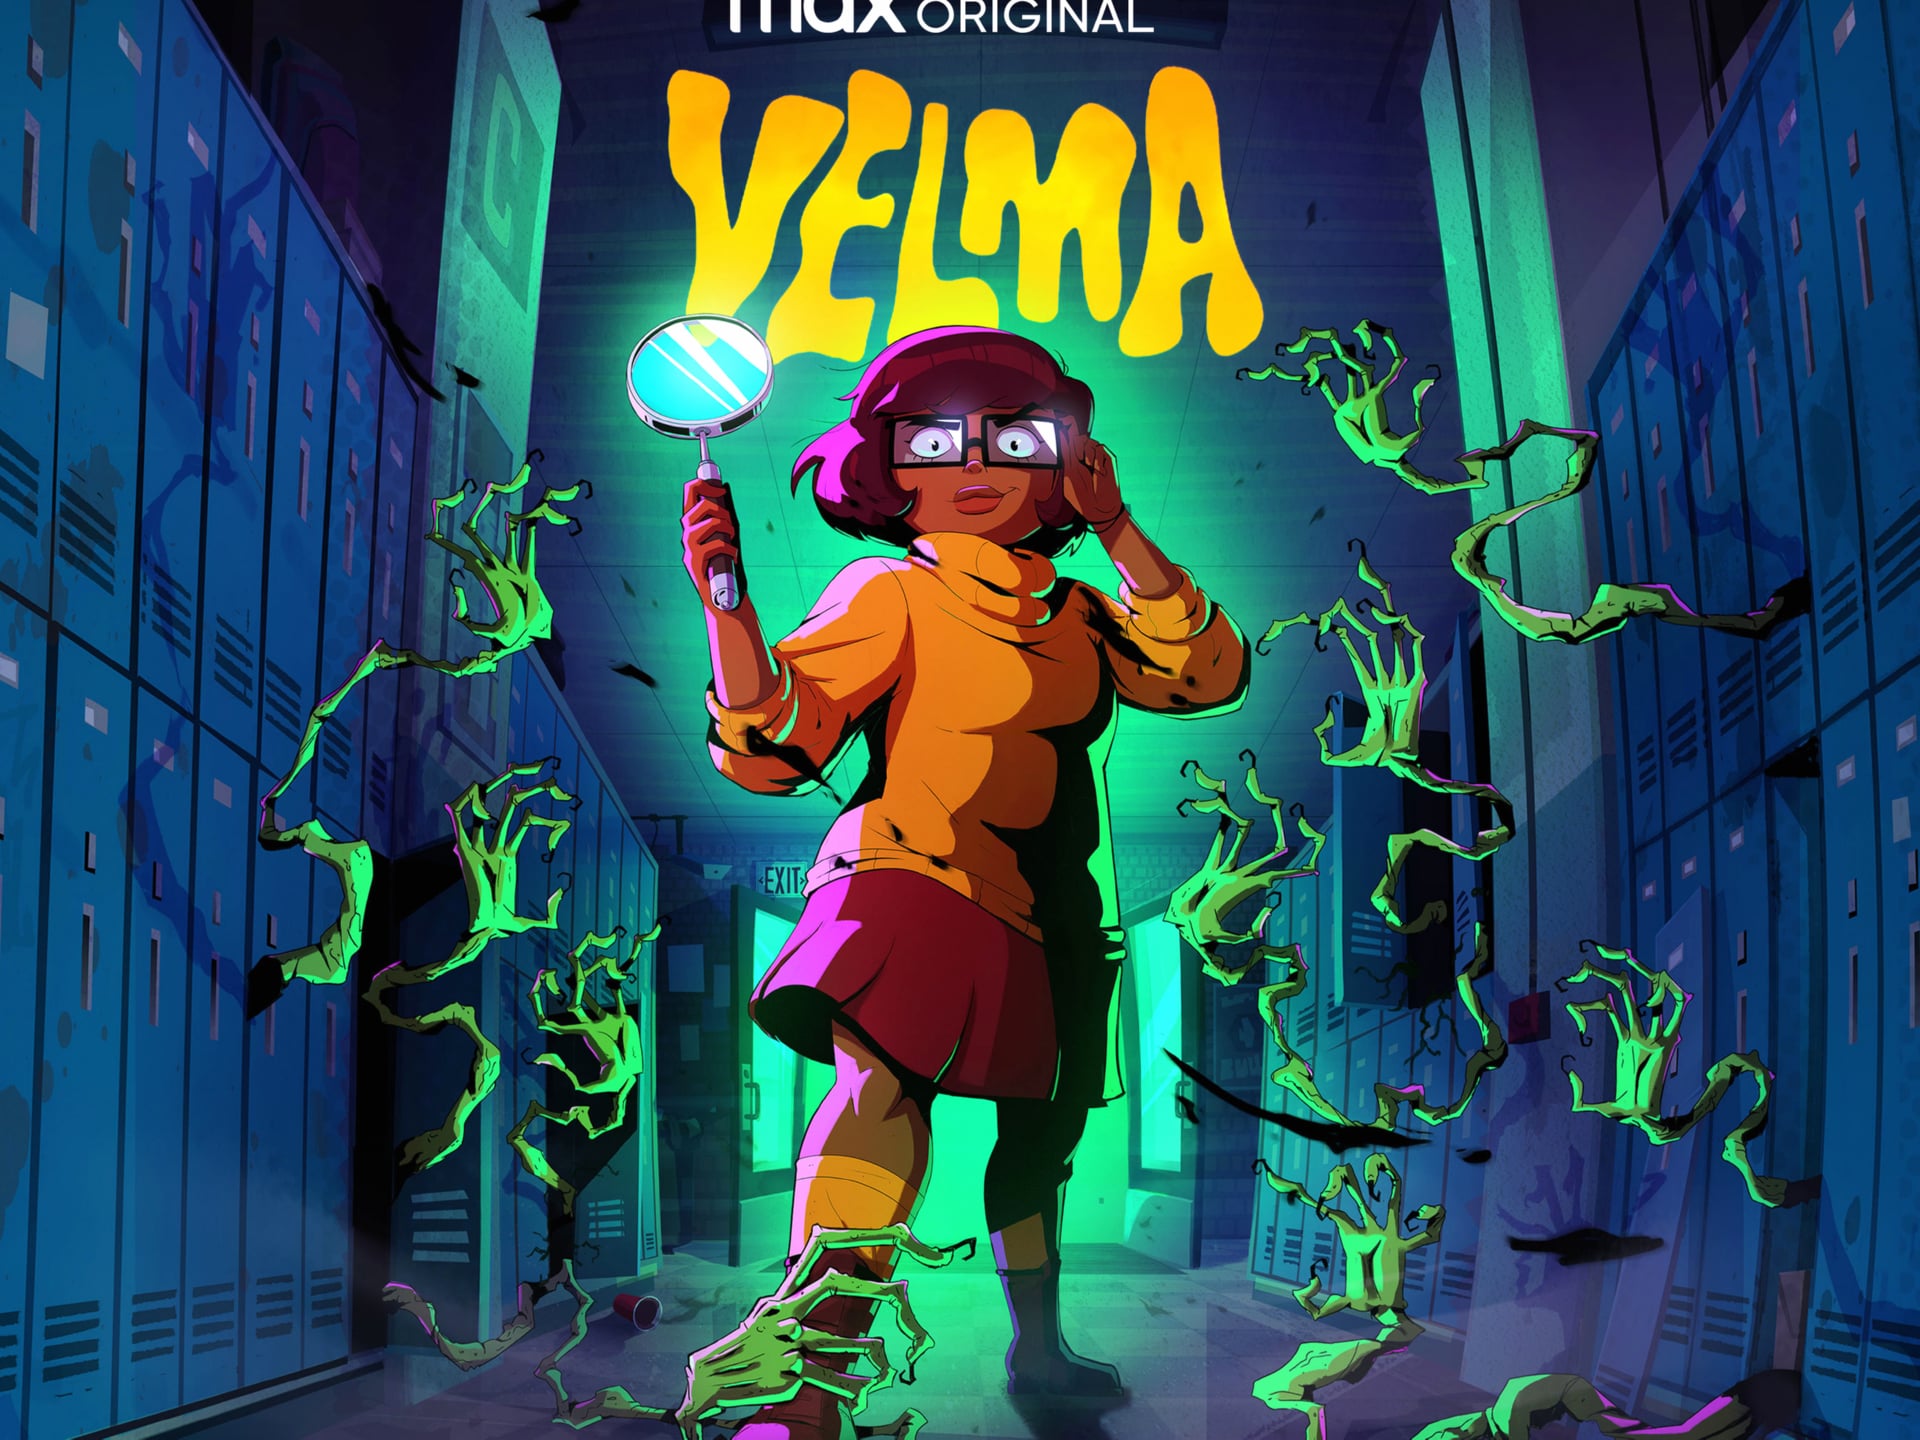 Velma at 2048 x 2048 iPad size wallpapers HD quality